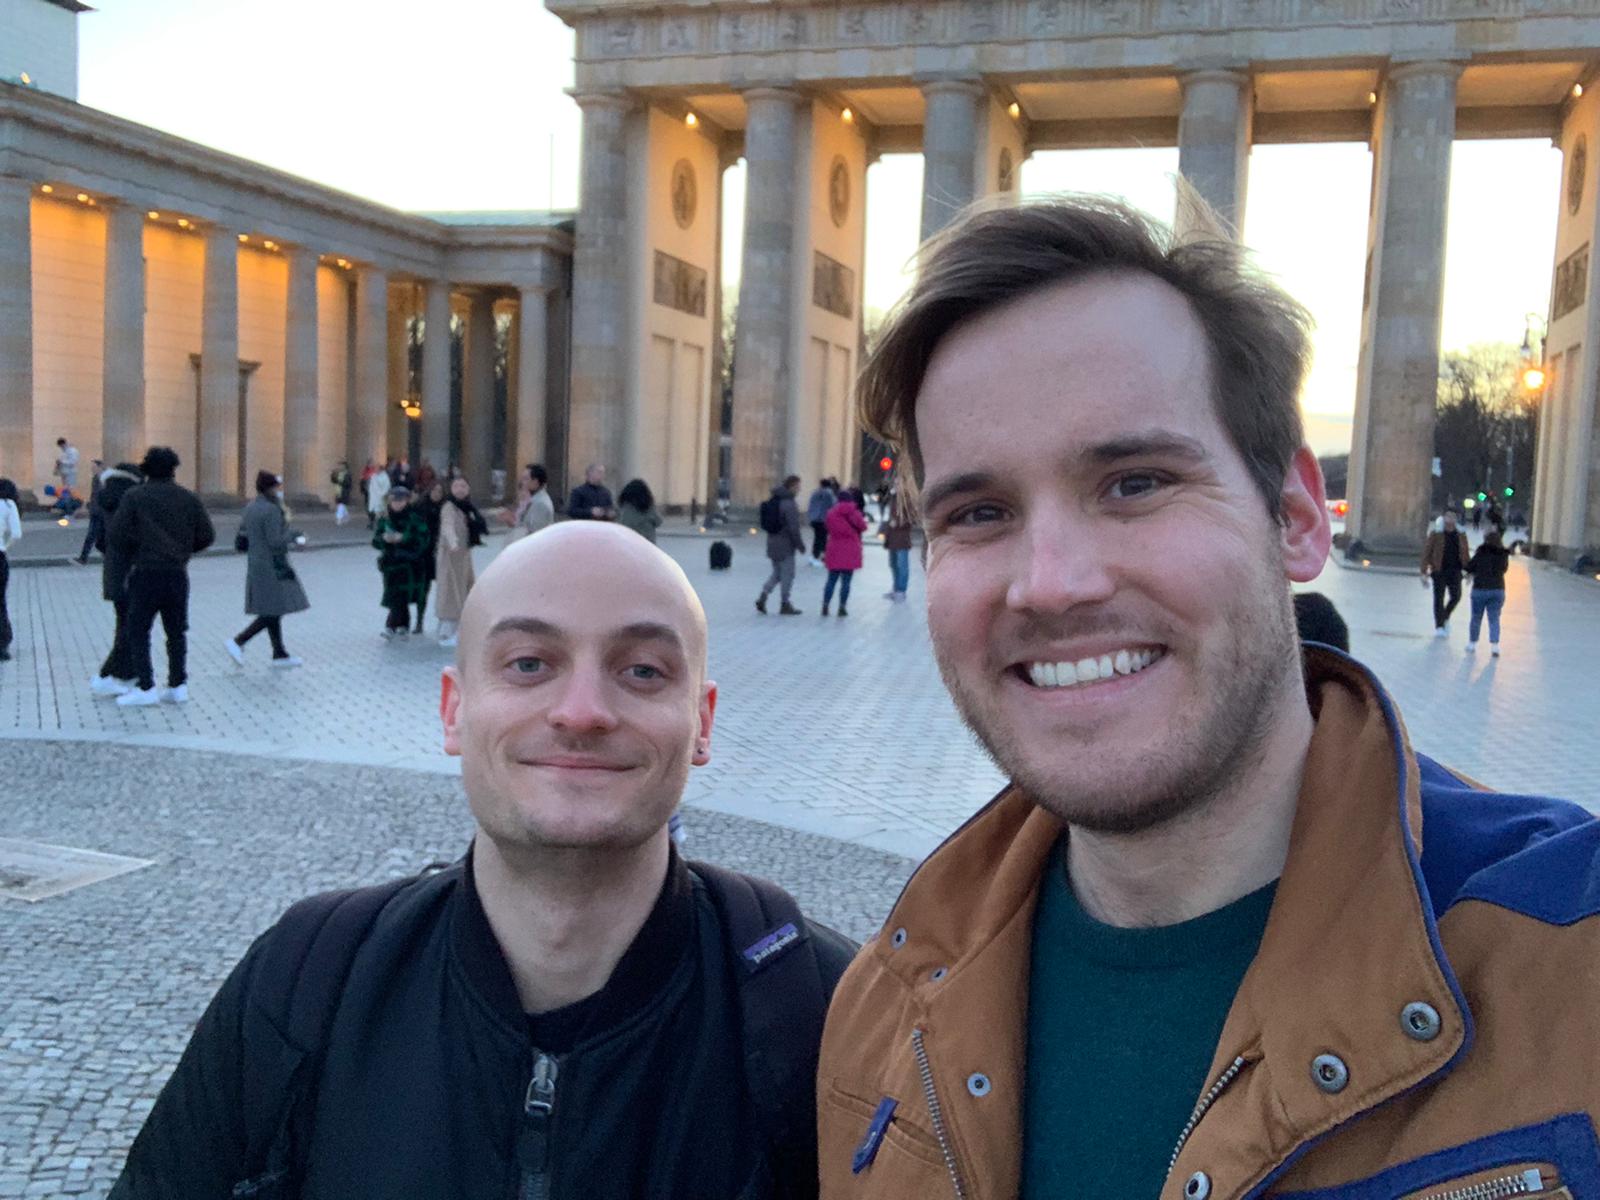 Two men in front of the Brandenburg Gate in Berlin